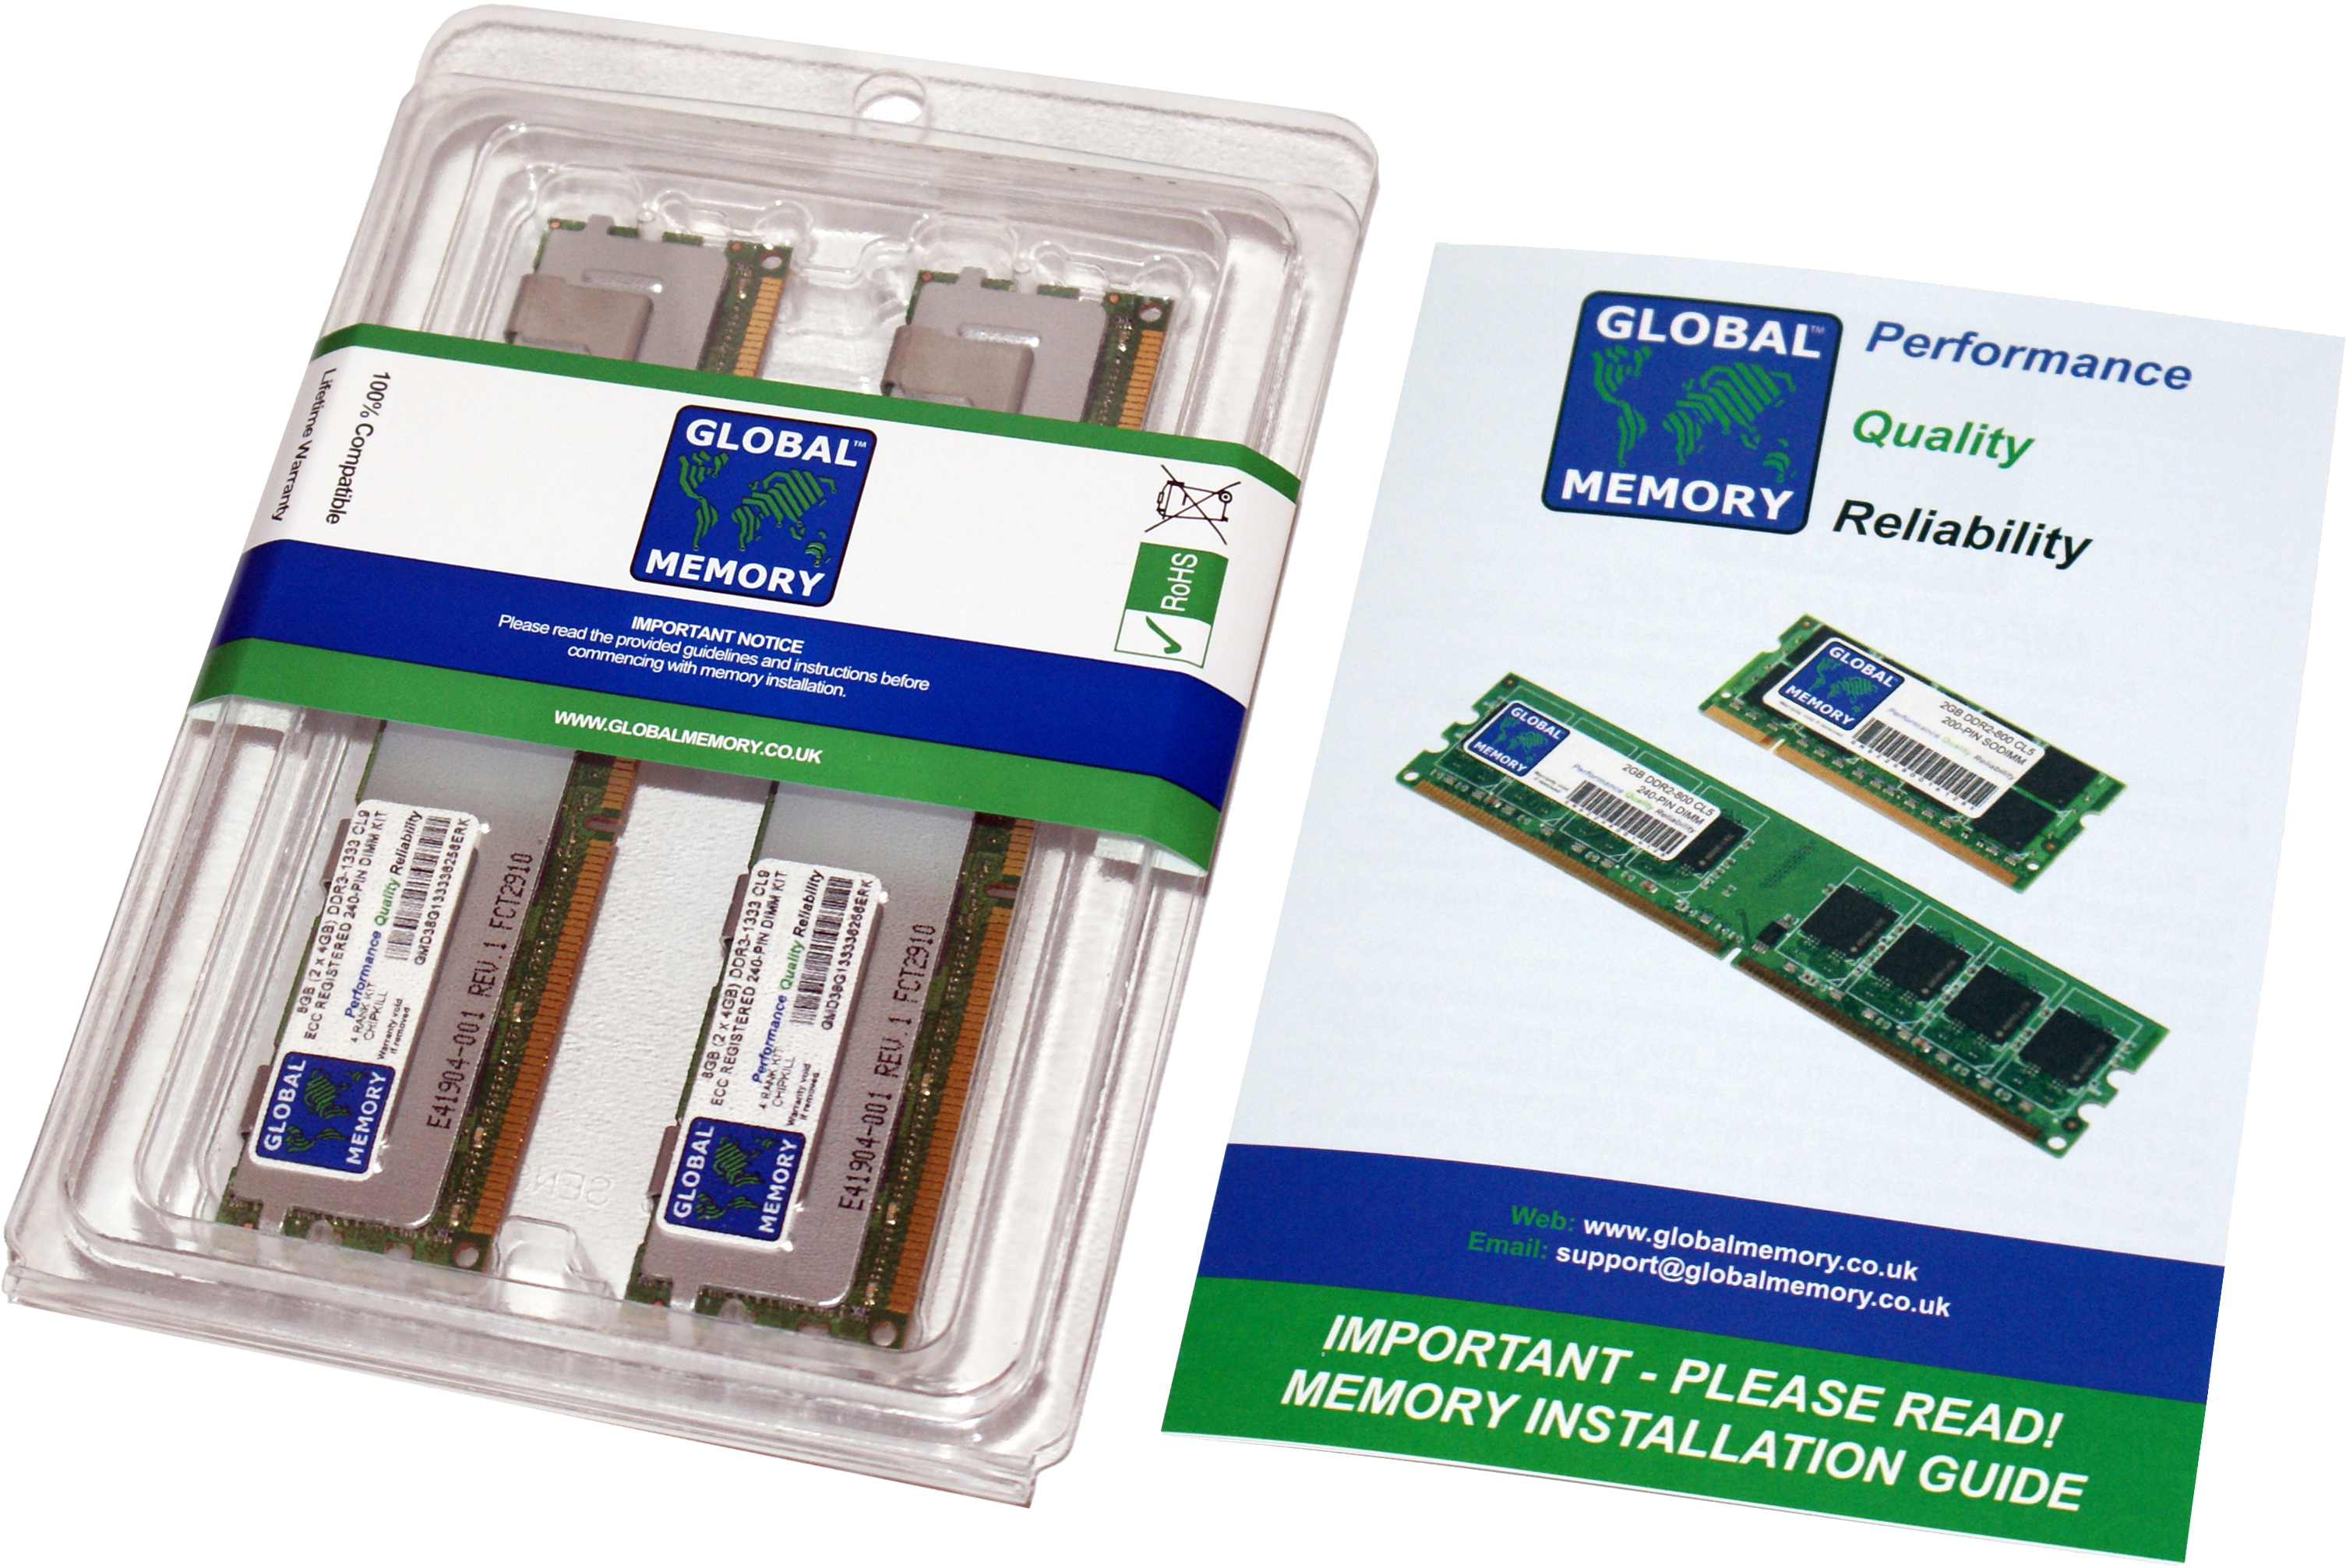 32GB (2 x 16GB) DDR3 1333MHz PC3-10600 240-PIN ECC REGISTERED DIMM (RDIMM) MEMORY RAM KIT FOR FUJITSU SERVERS/WORKSTATIONS (8 RANK KIT NON-CHIPKILL)